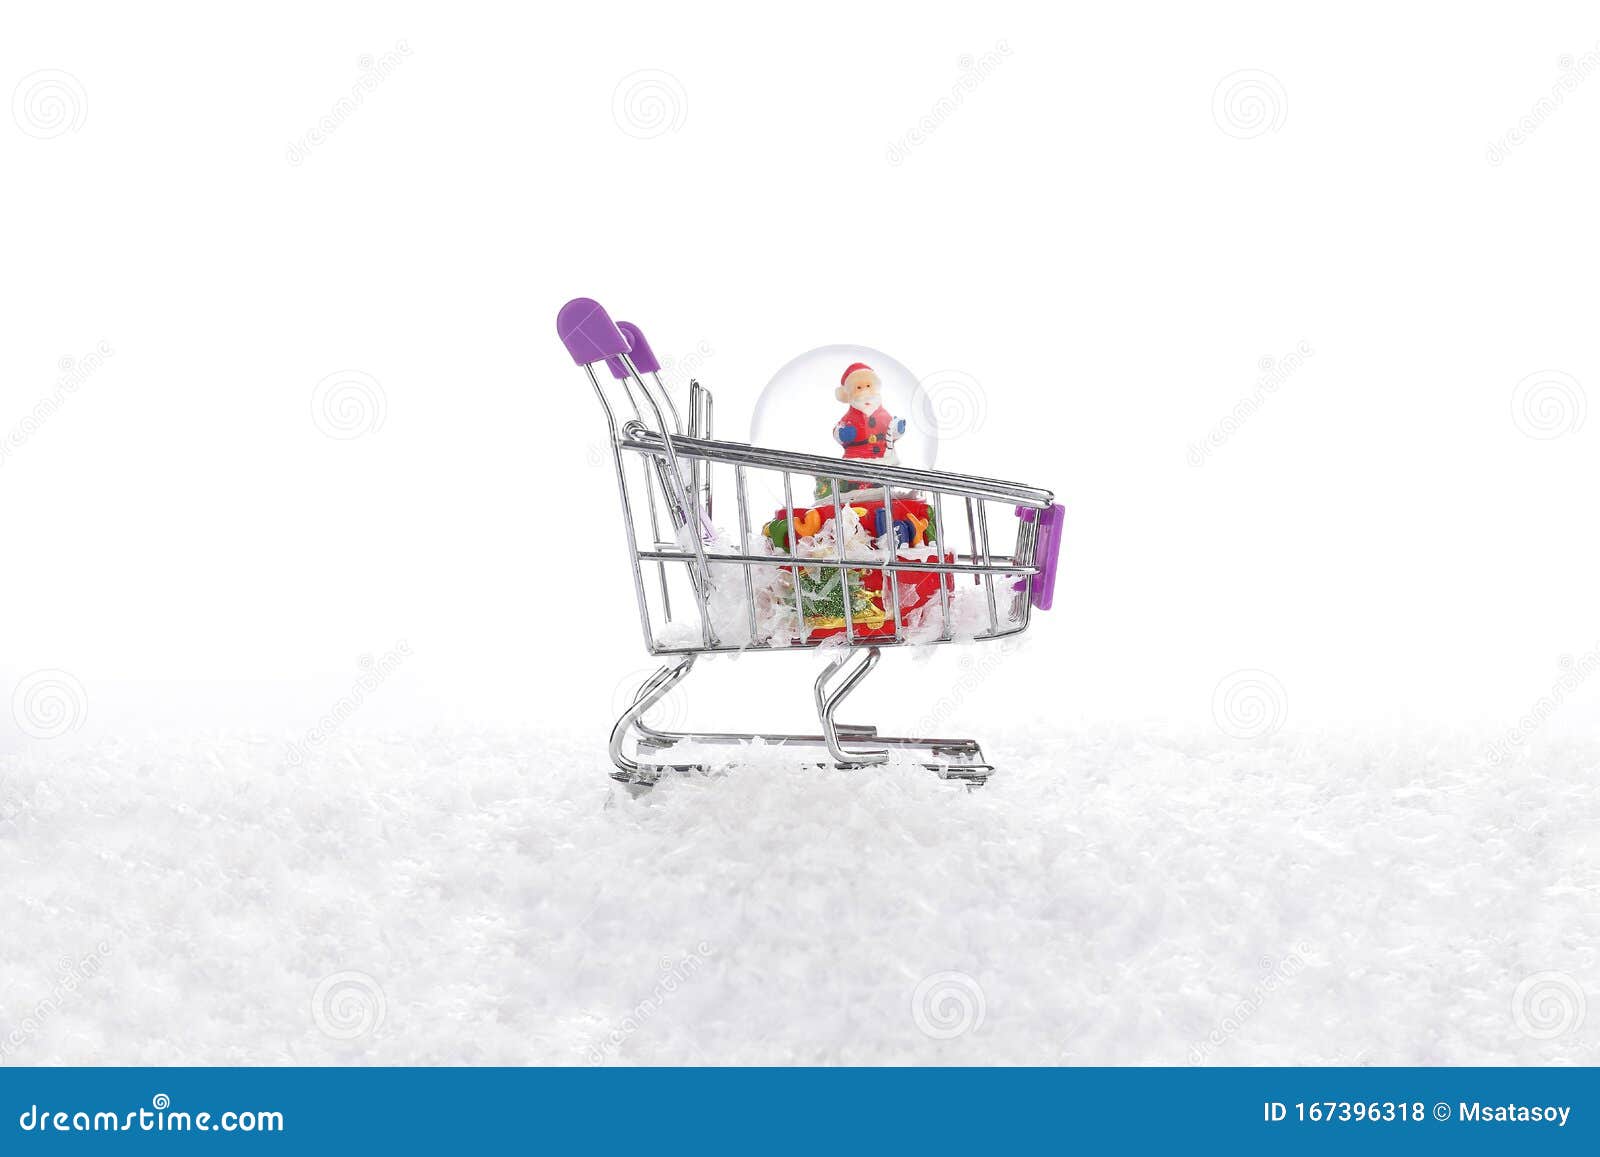 snow on iÃÂ§inde christmas water globe with santa claus shopping cart, on white background.